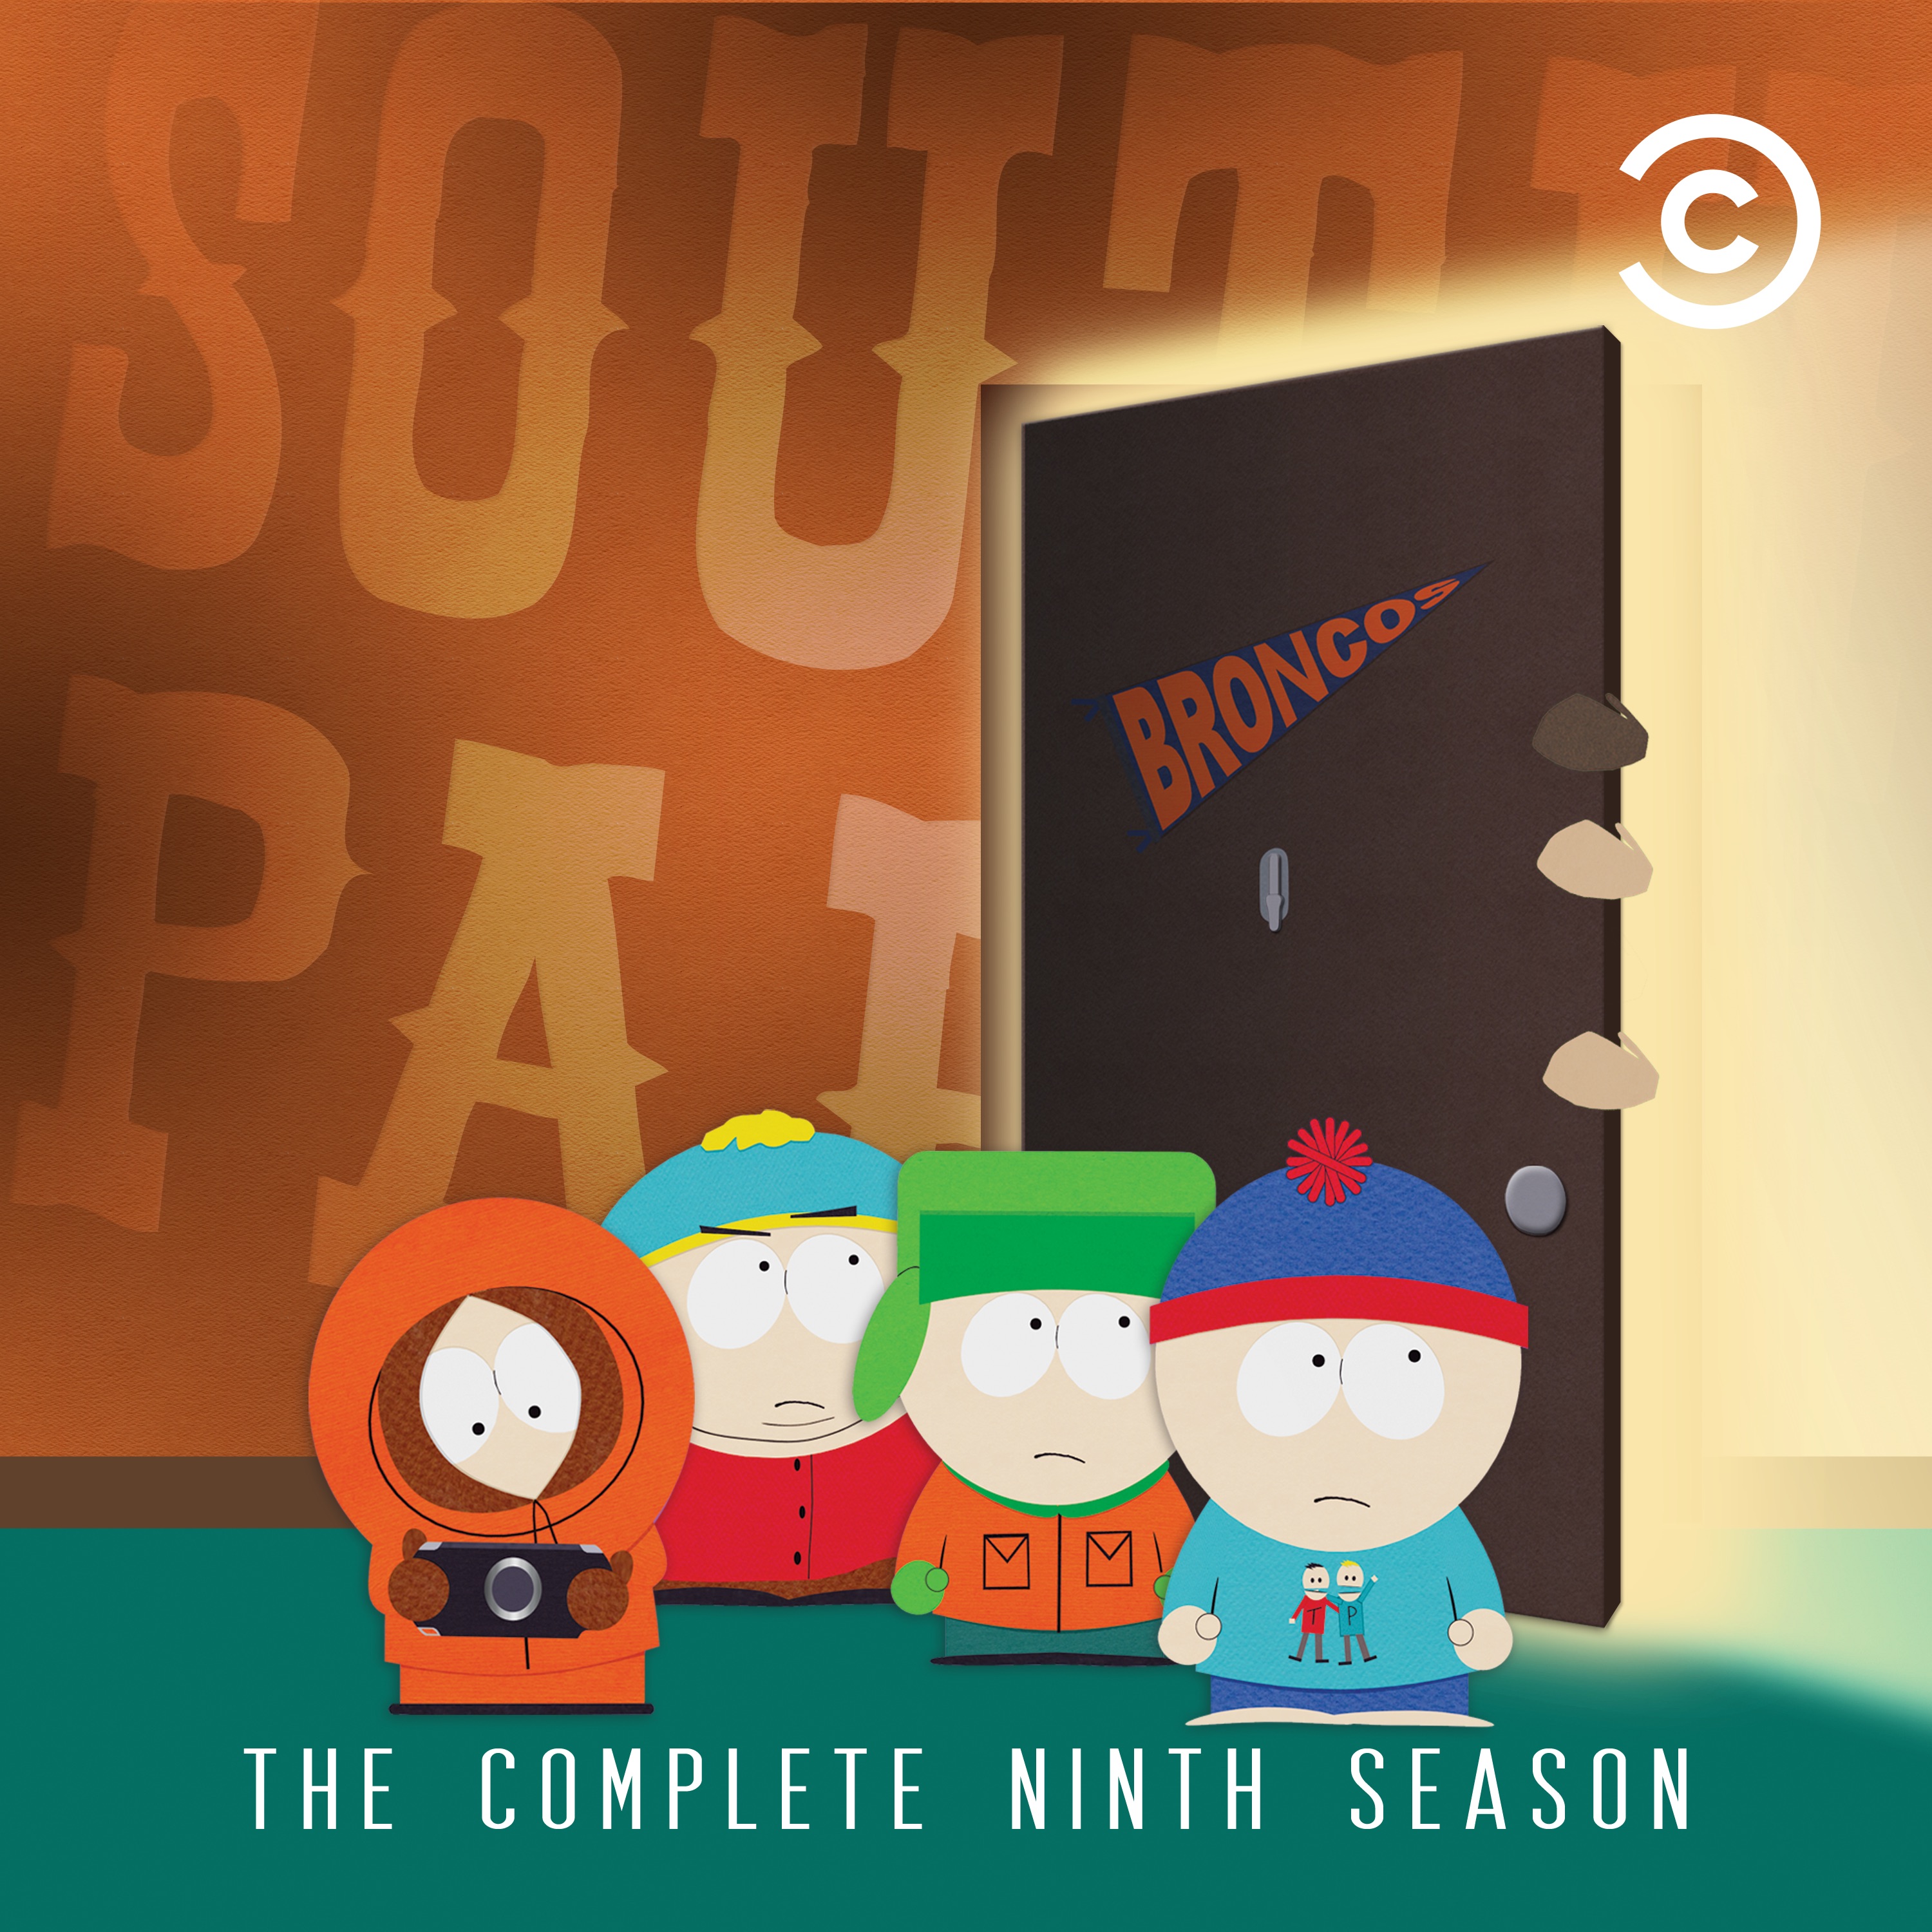 South Park Studios - YouTube